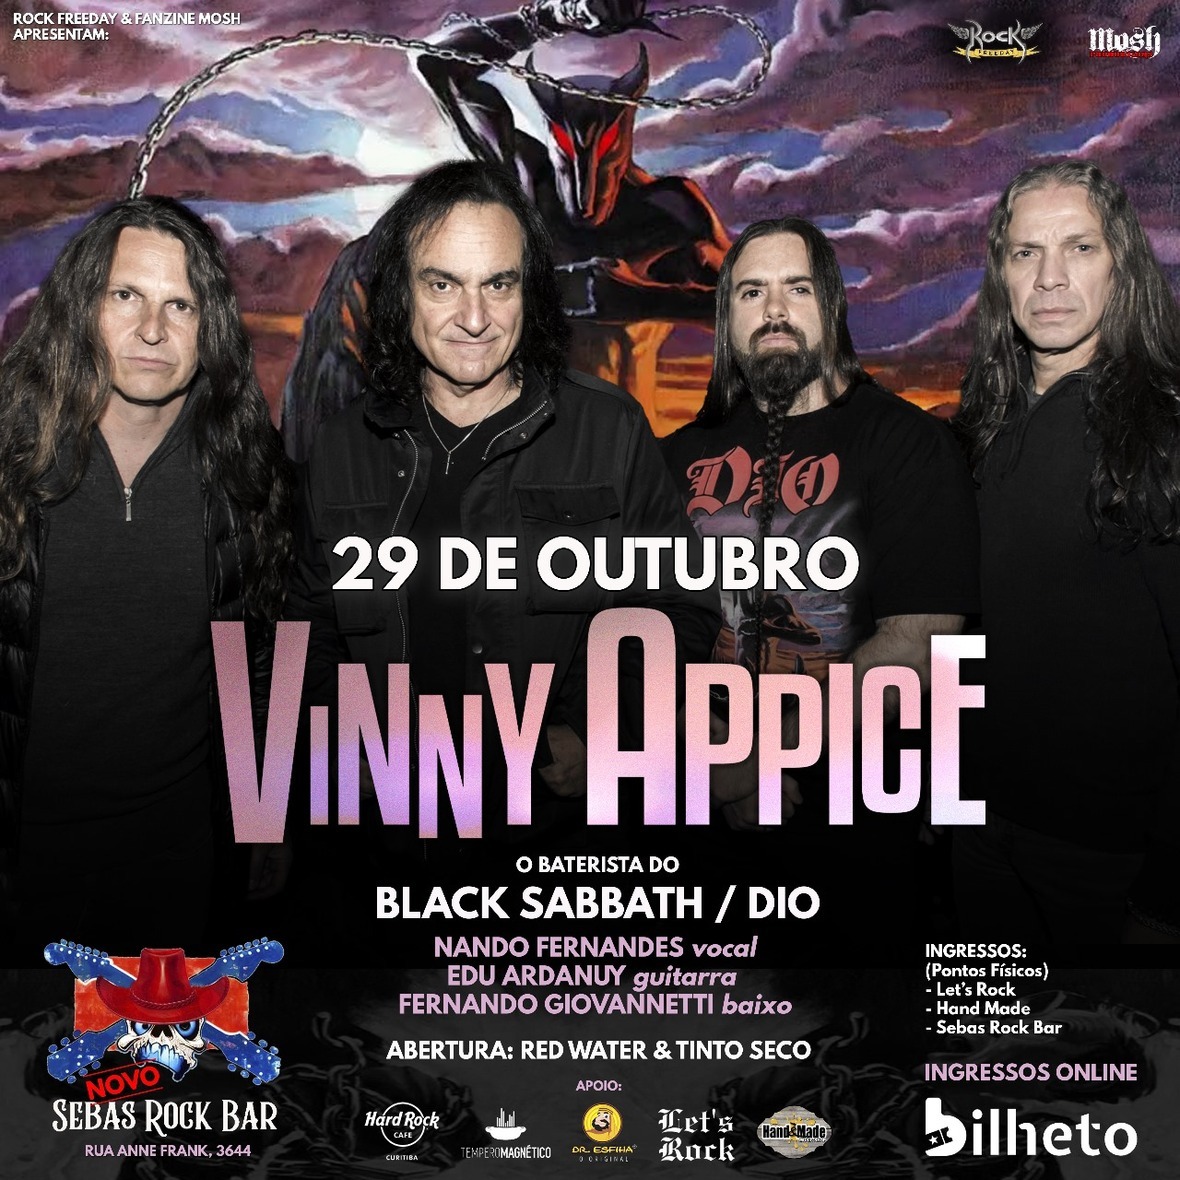 Vinny Appice, ex-Black Sabbath e Dio, se apresenta domingo (29) em Curitiba